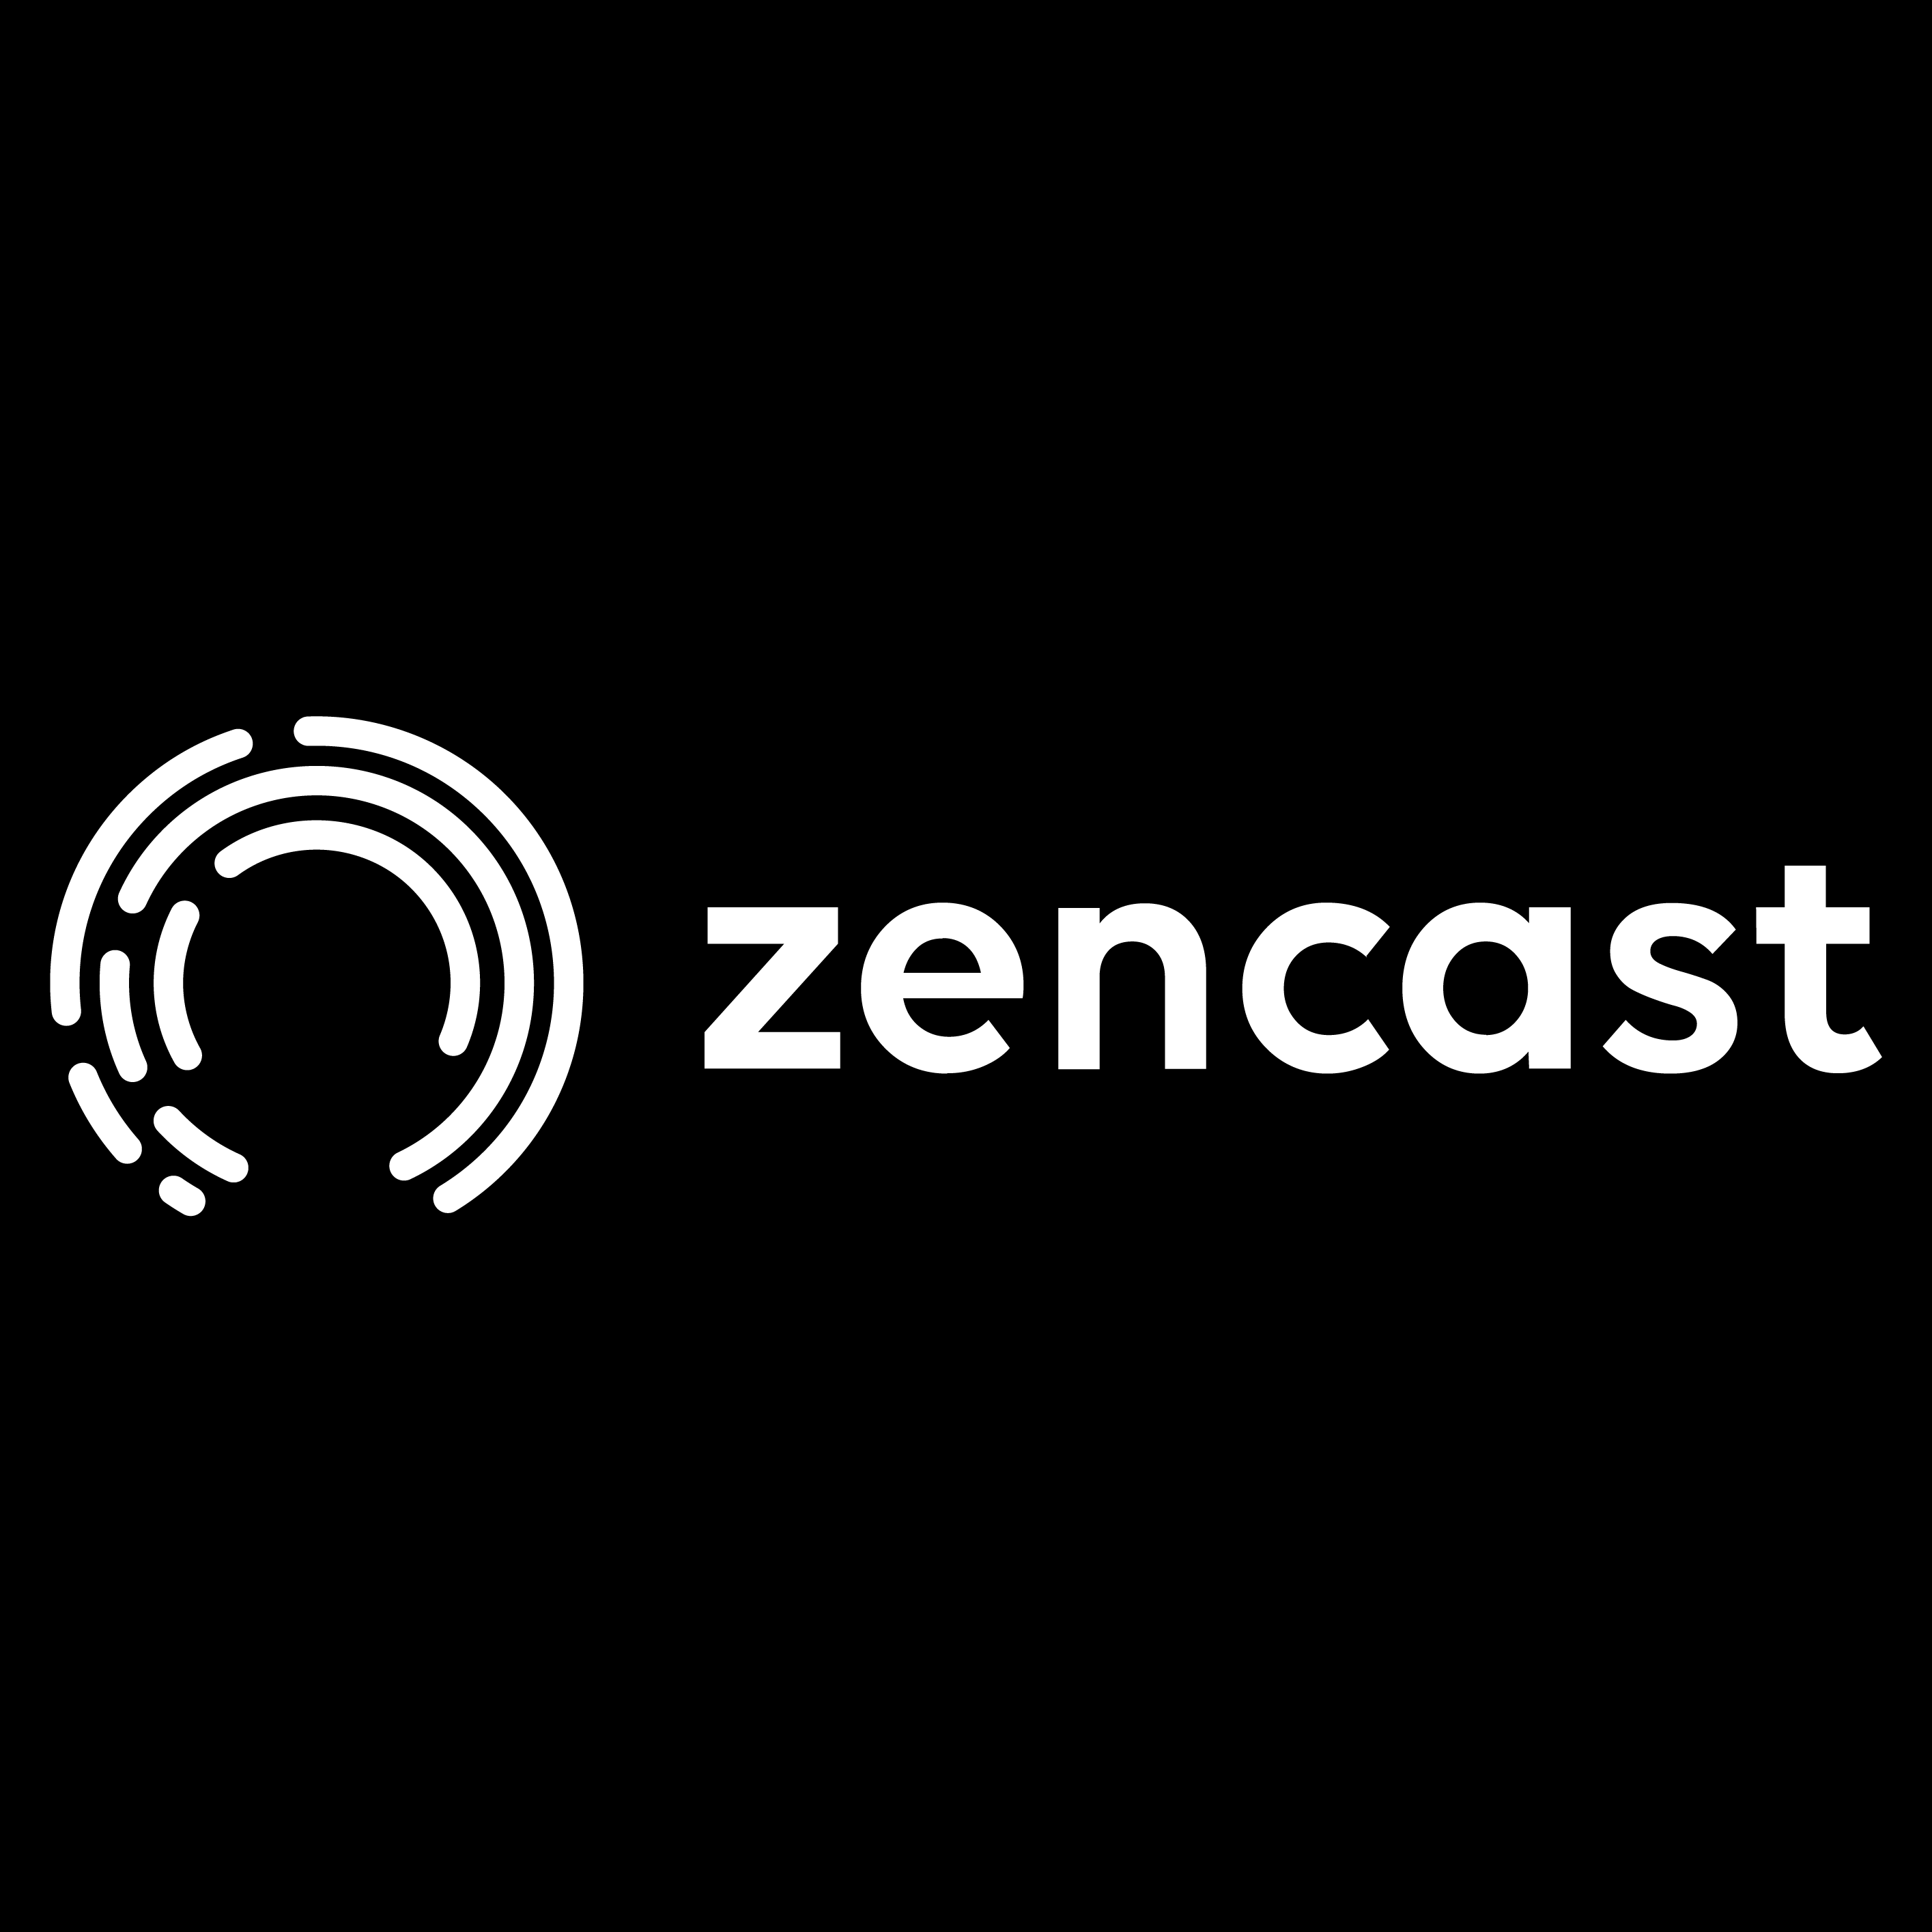 zencast.png